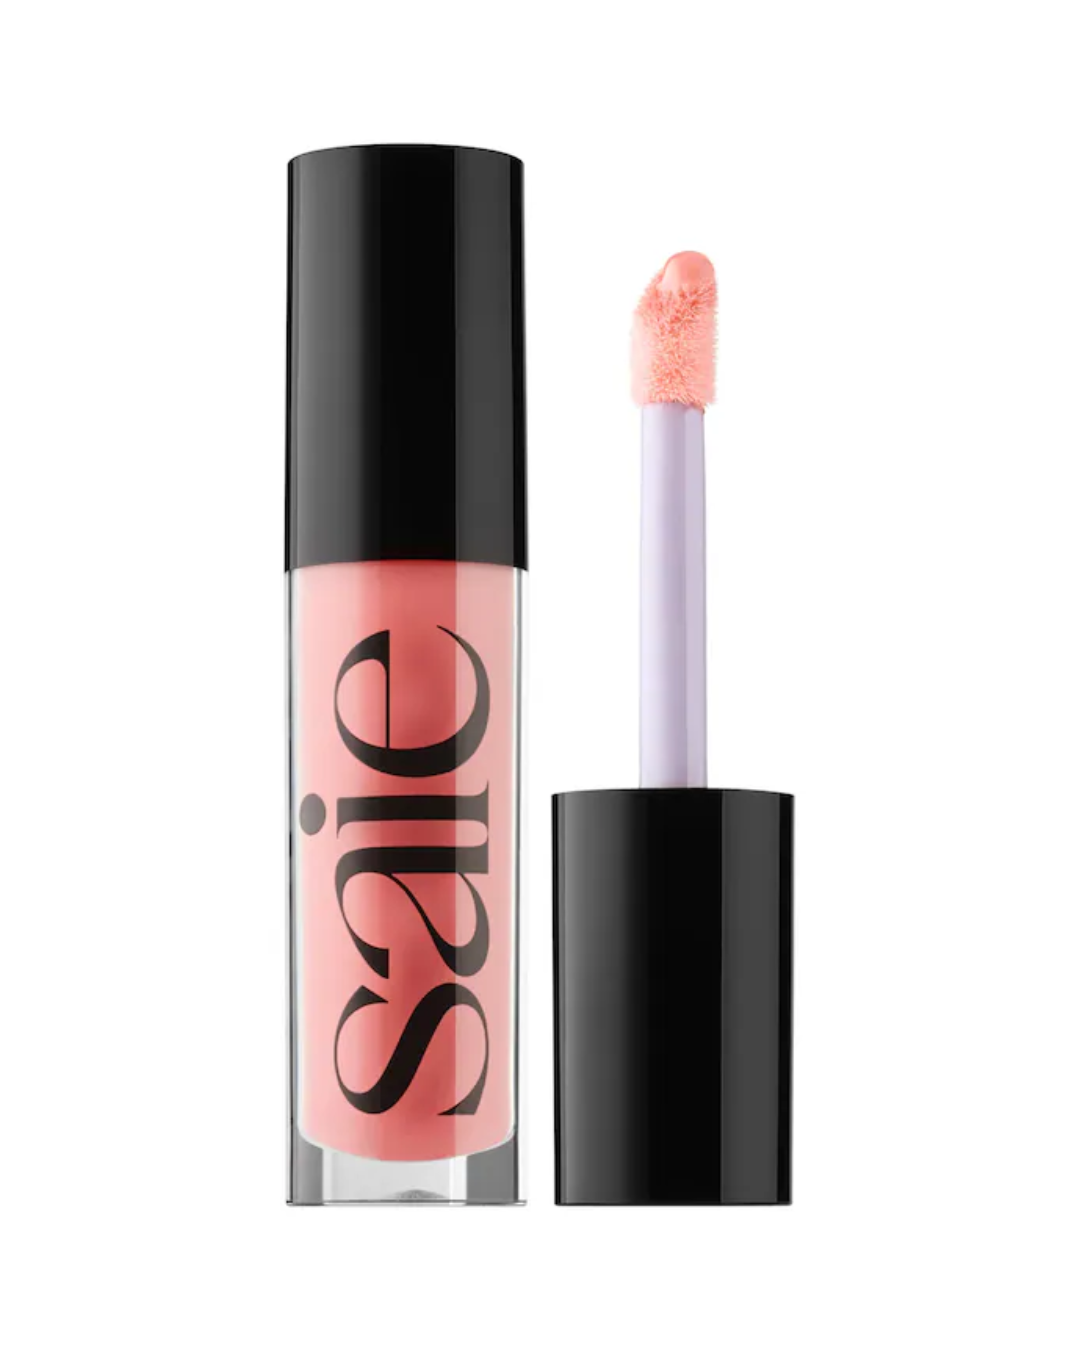 A tube of pink lip gloss